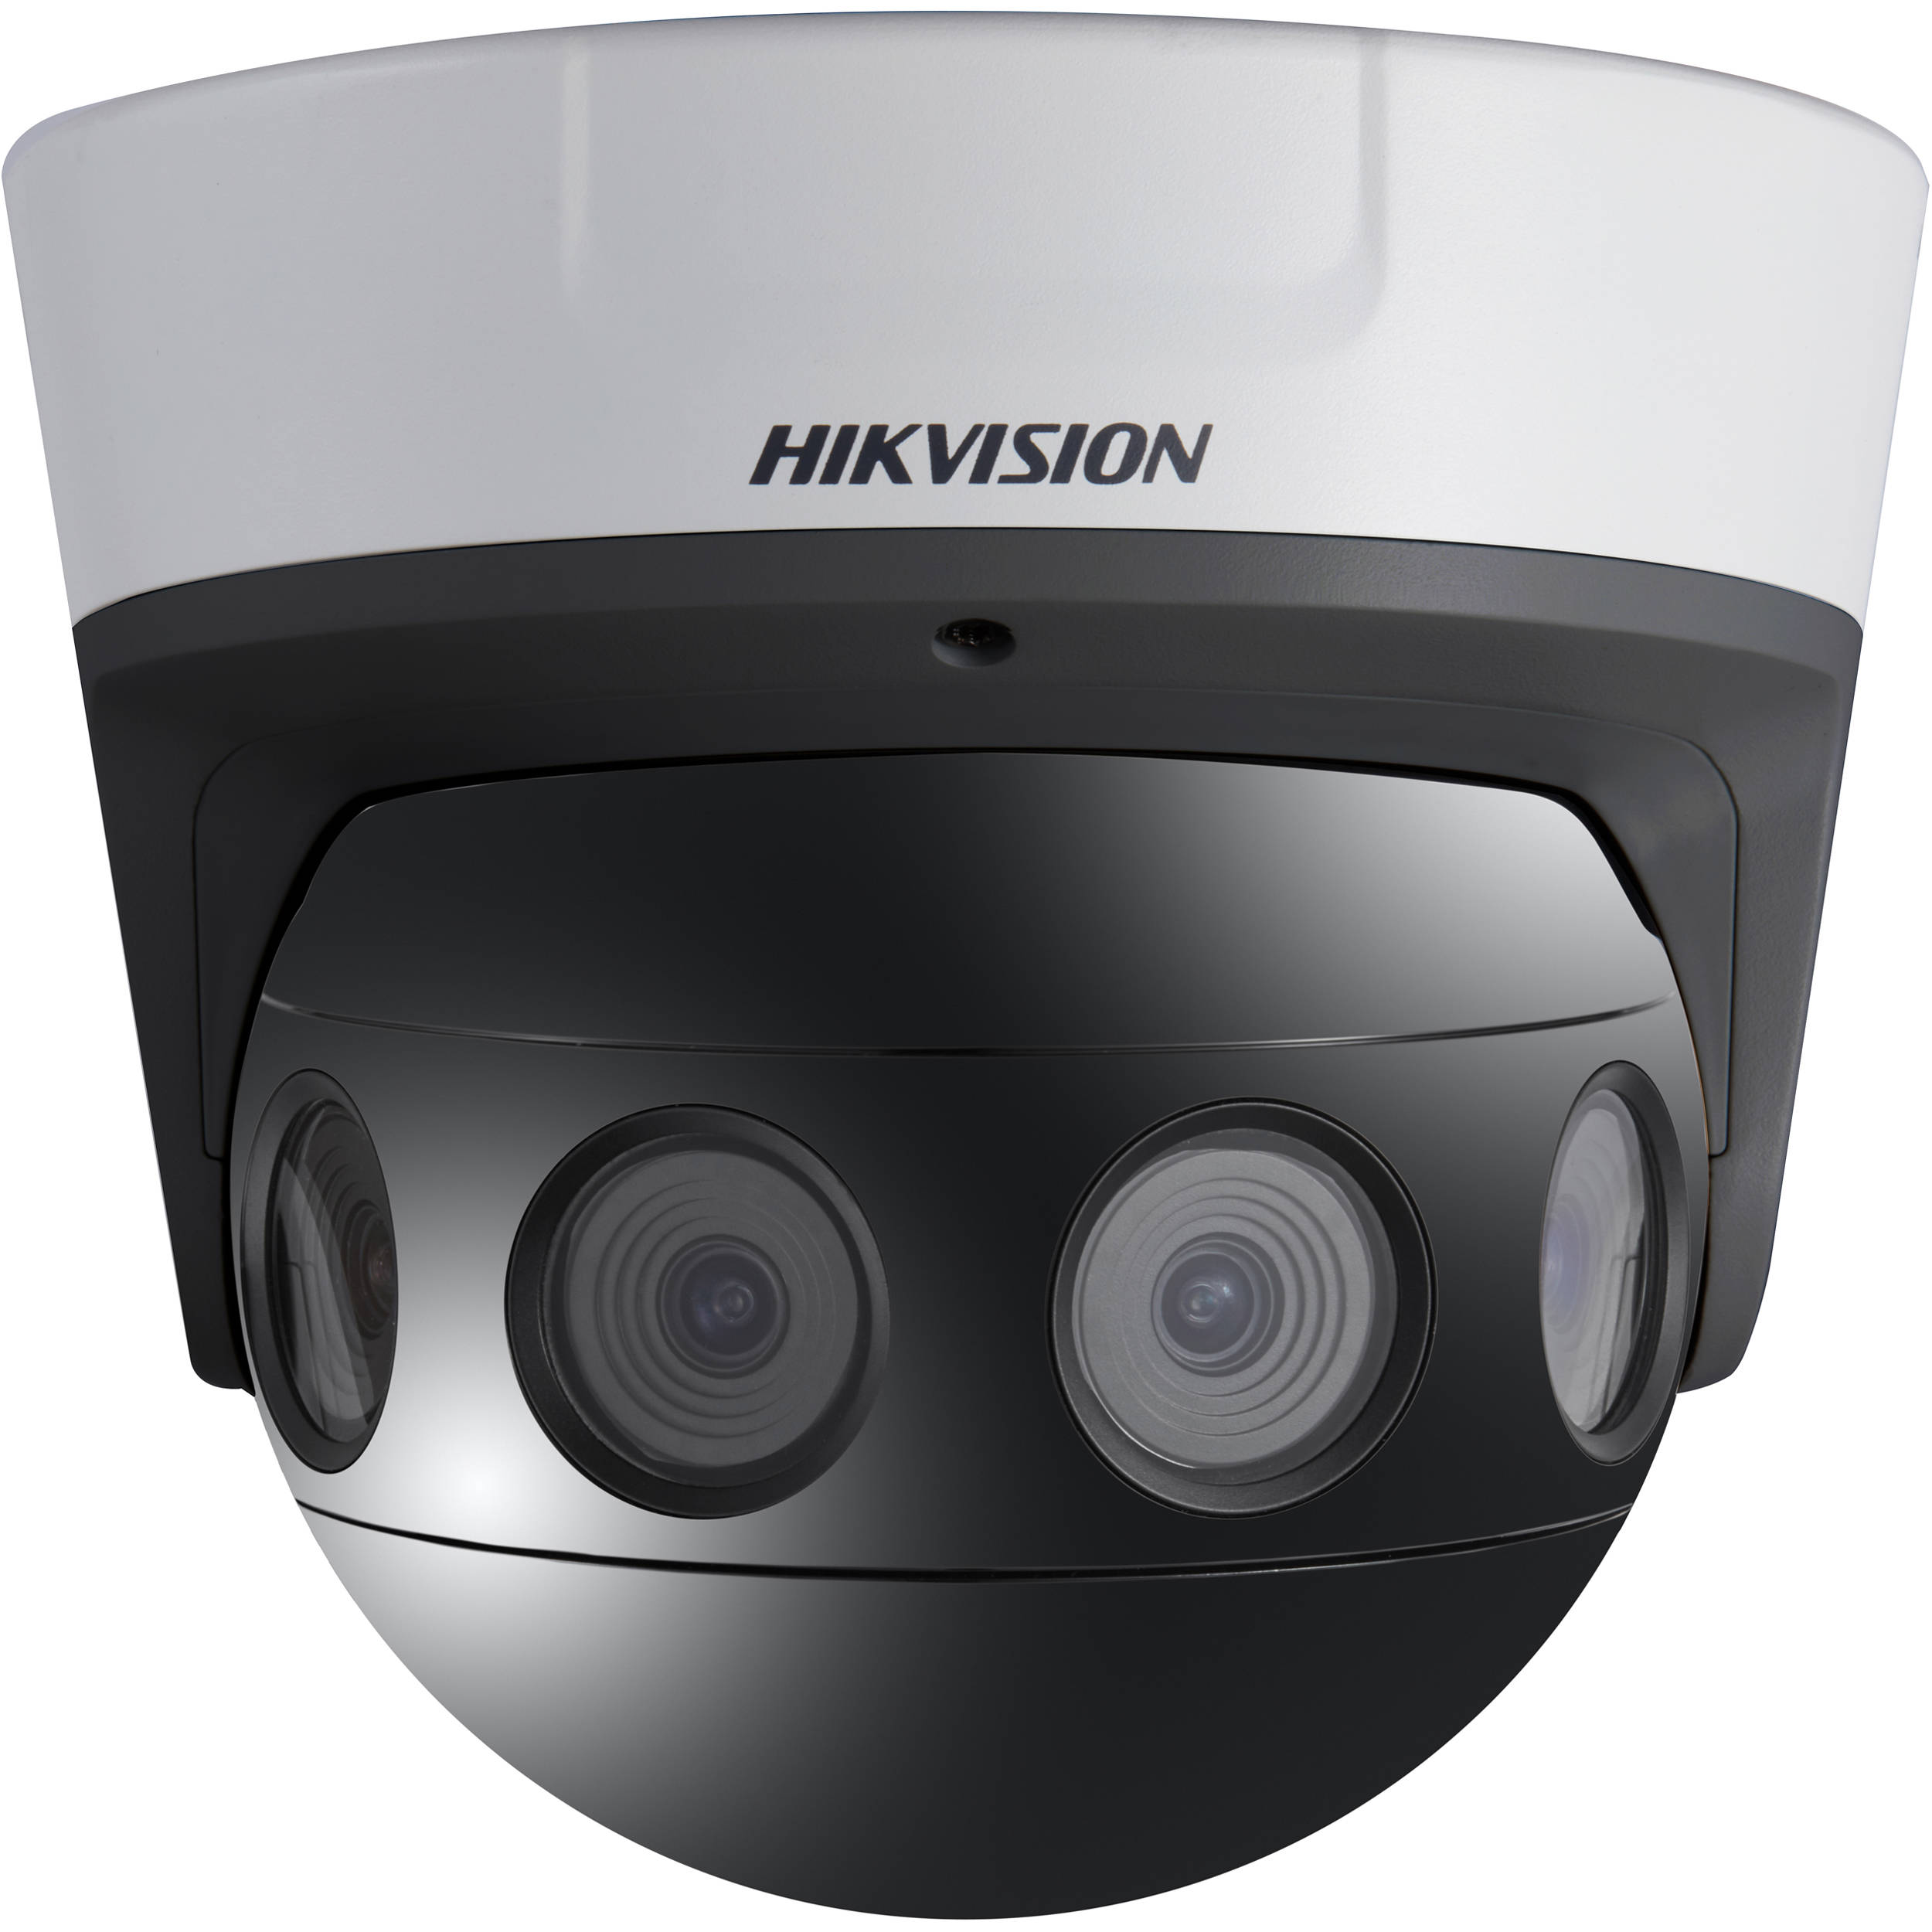 hikvision panoramic camera price